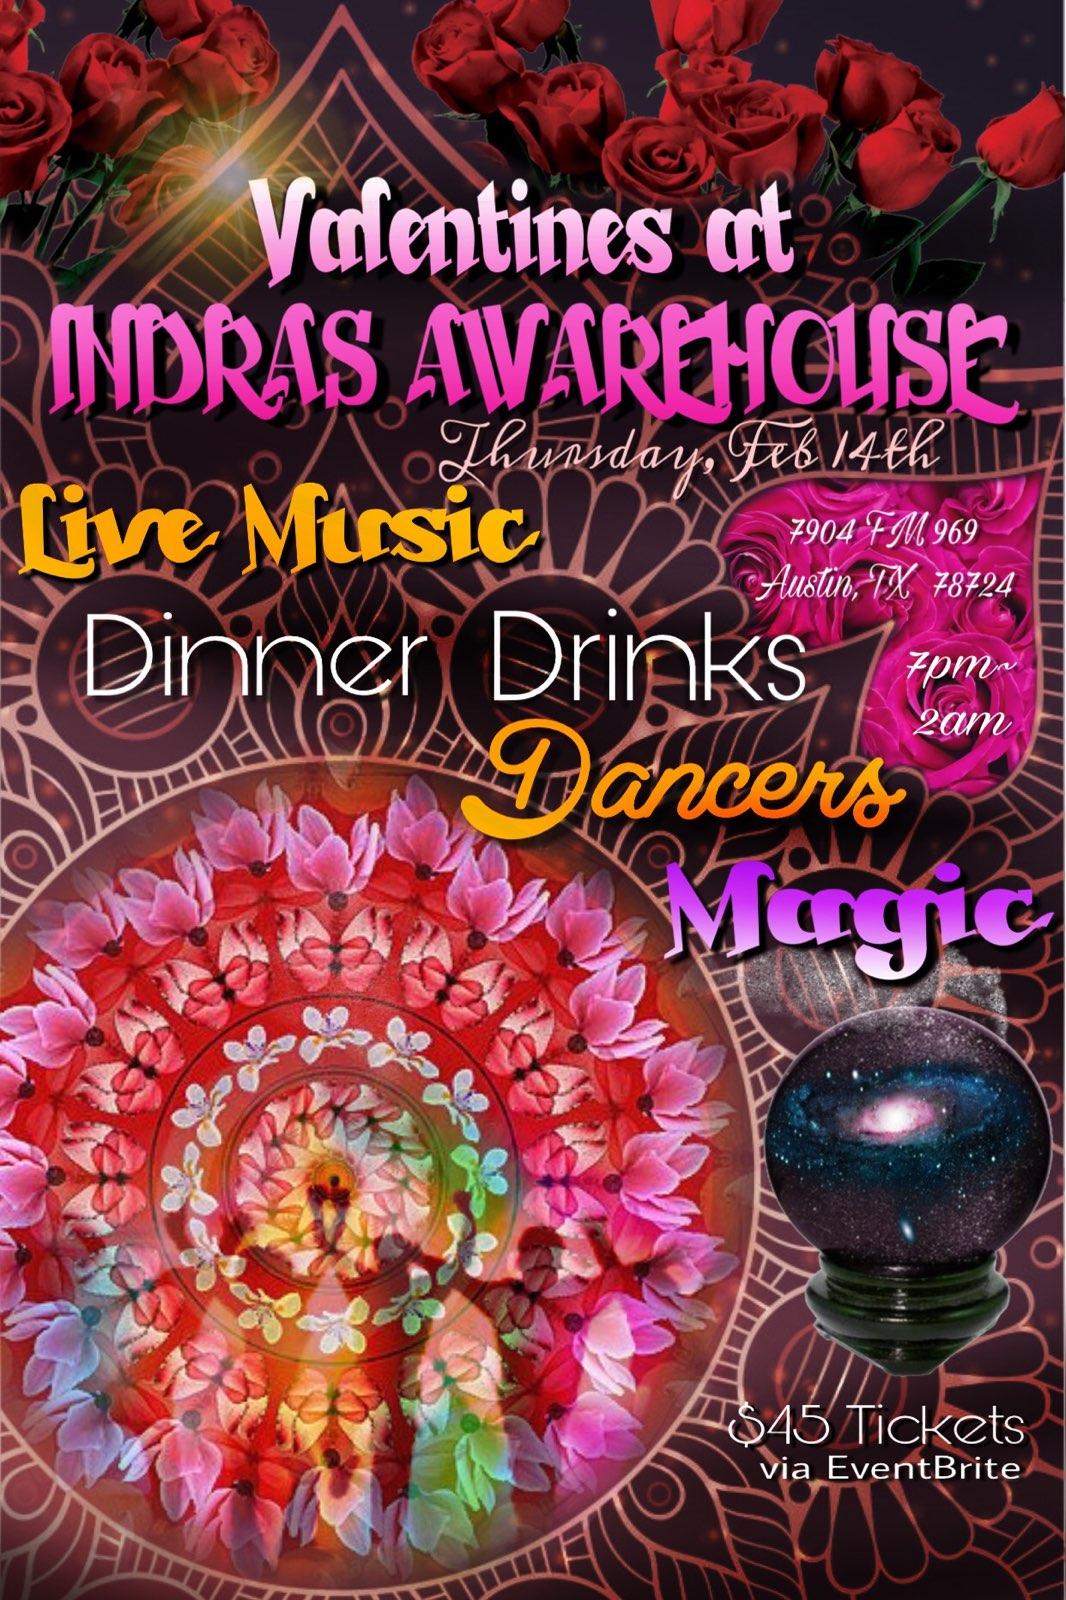 Indras Awarehouse